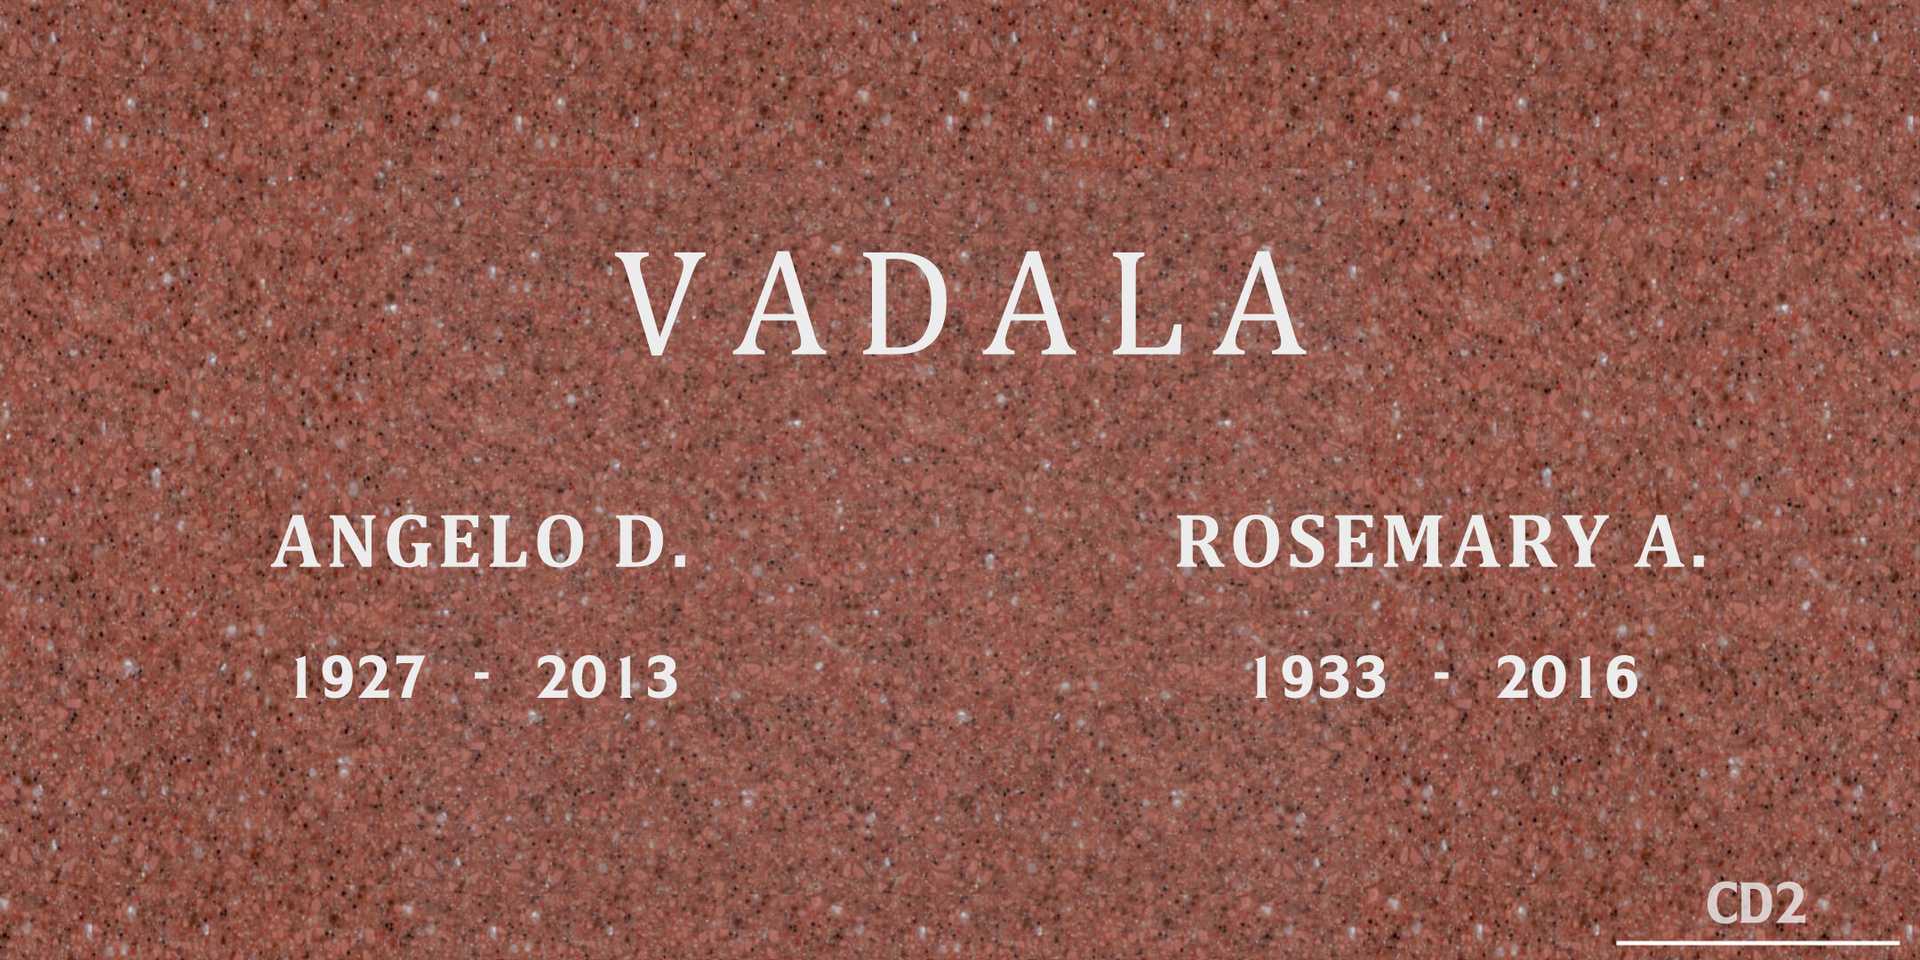 Angelo D. Vadala's grave